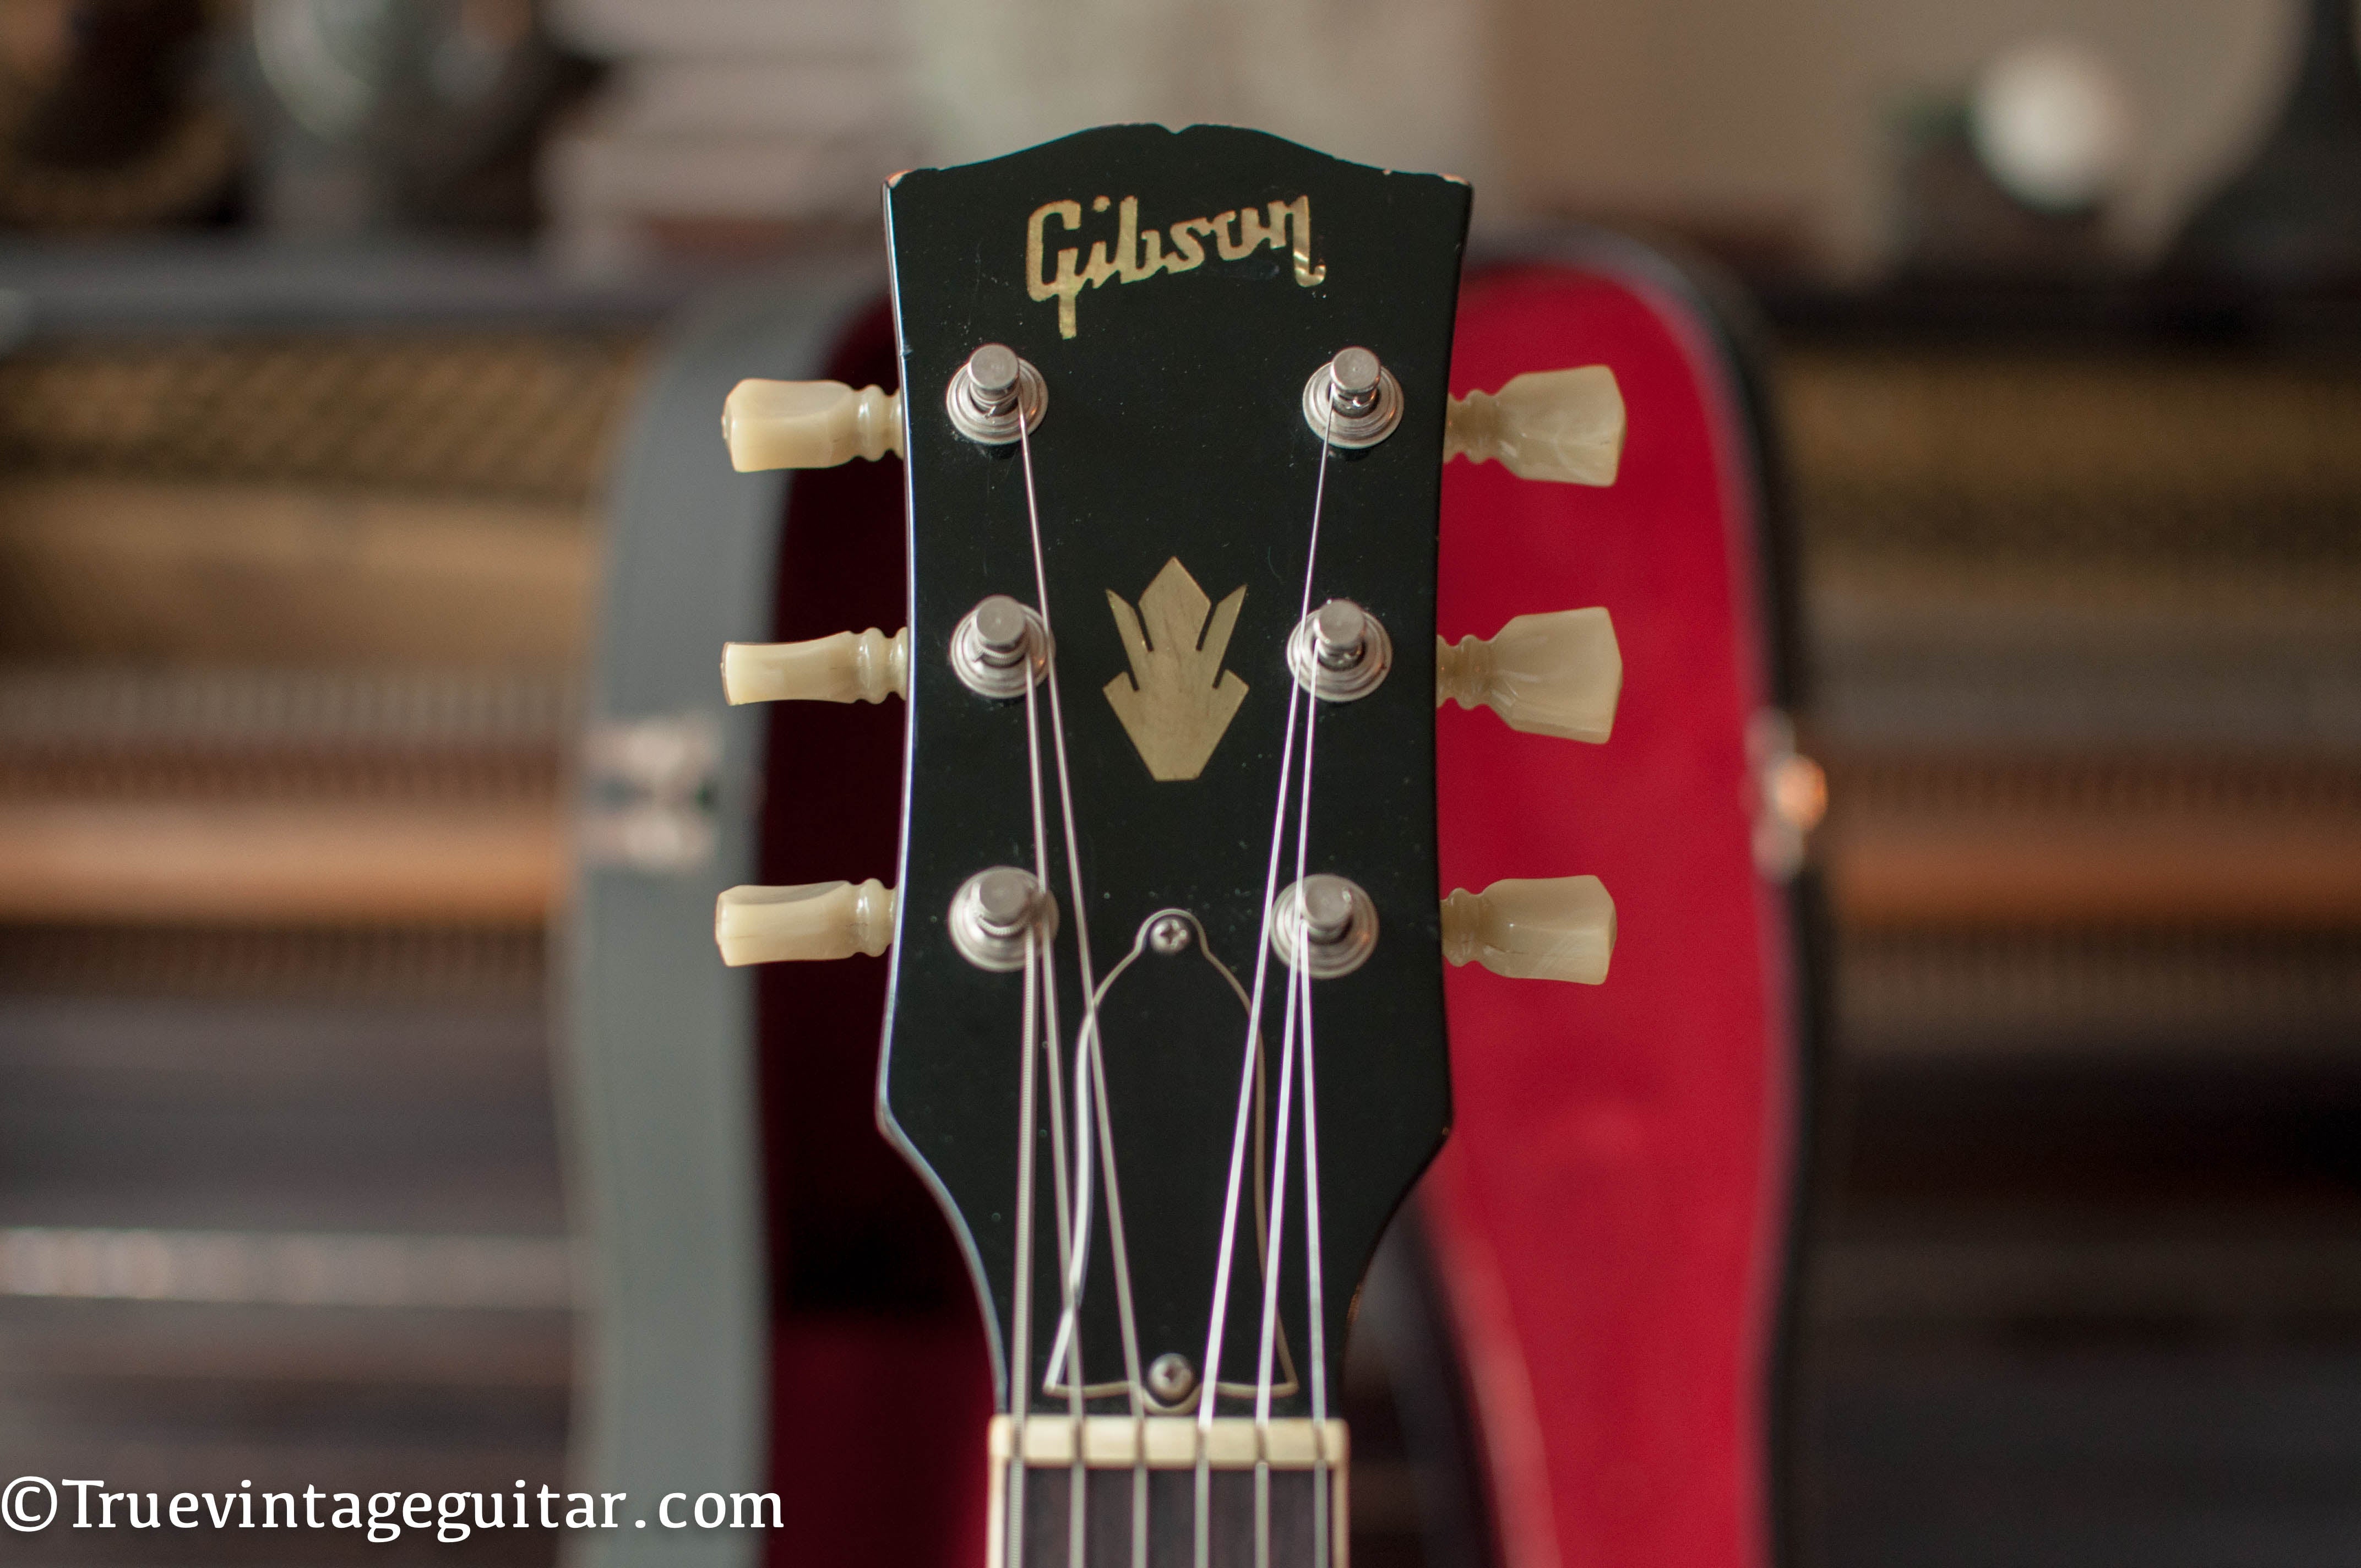 Pearl Gibson headstock logo, vintage Gibson ES-335